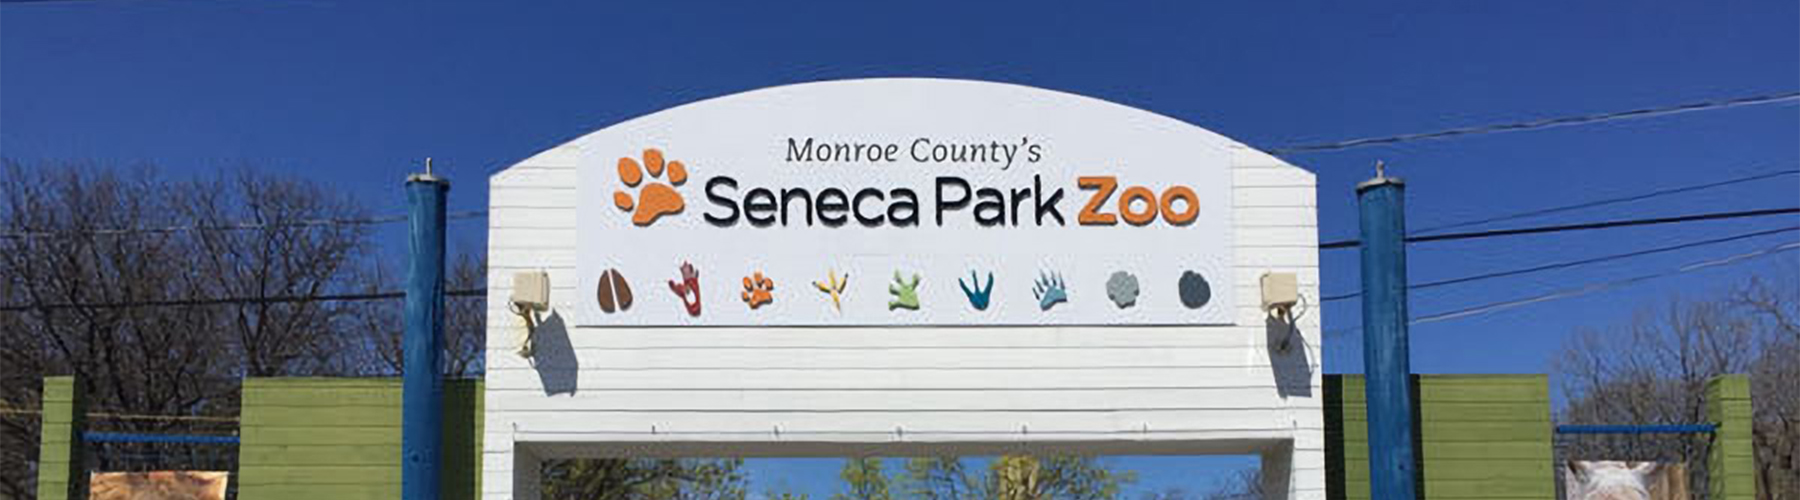 the entrance to the Seneca Park Zoo